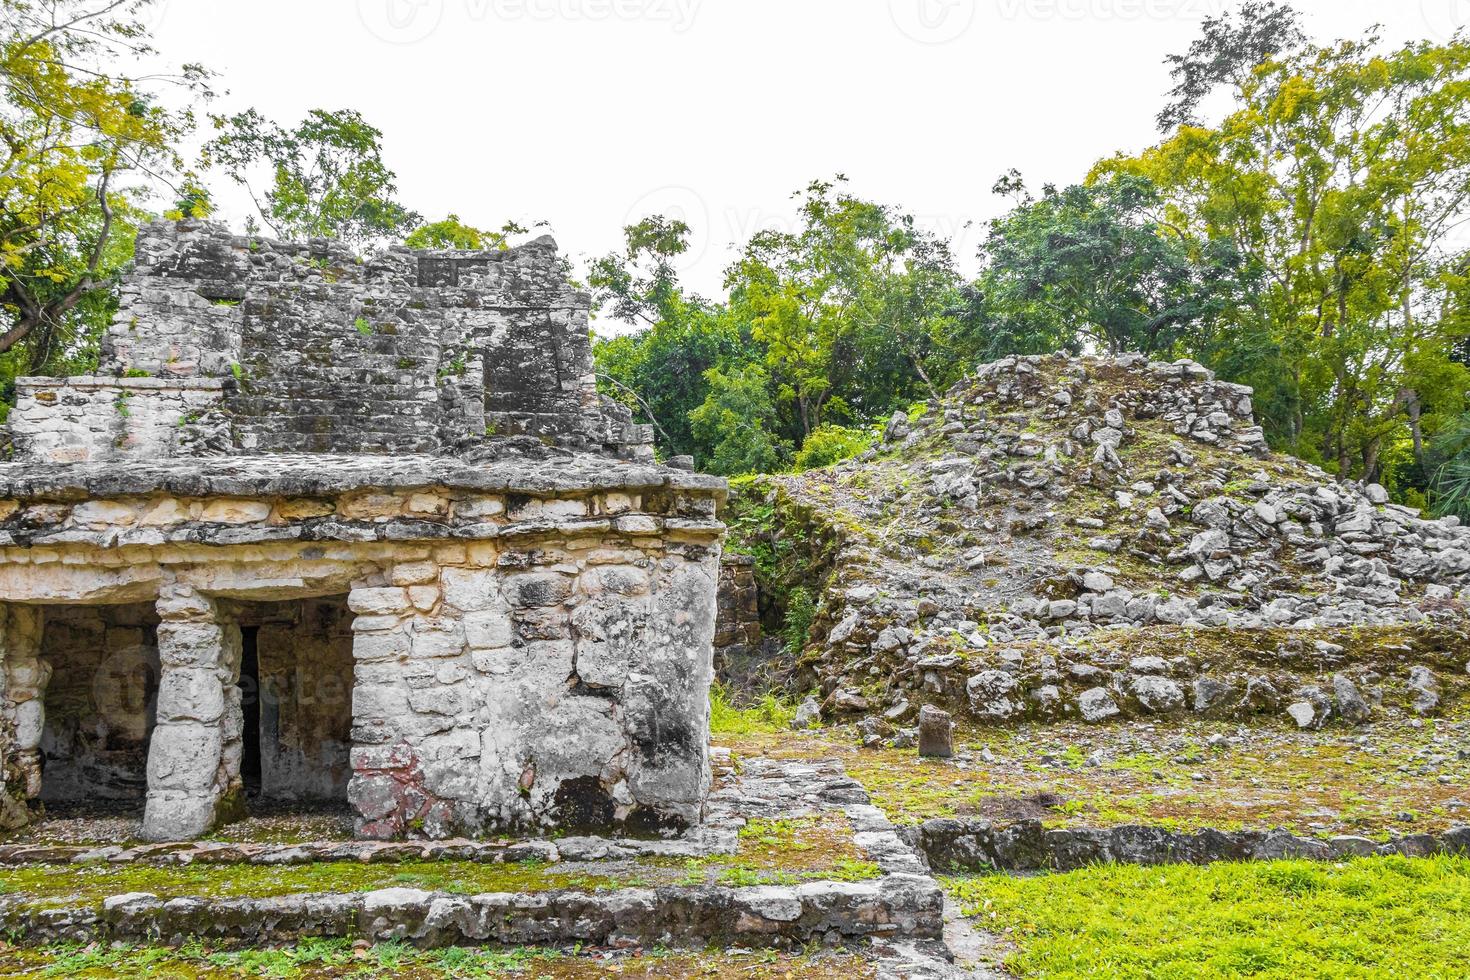 ancien site maya avec temple ruines pyramides artefacts muyil mexique. photo